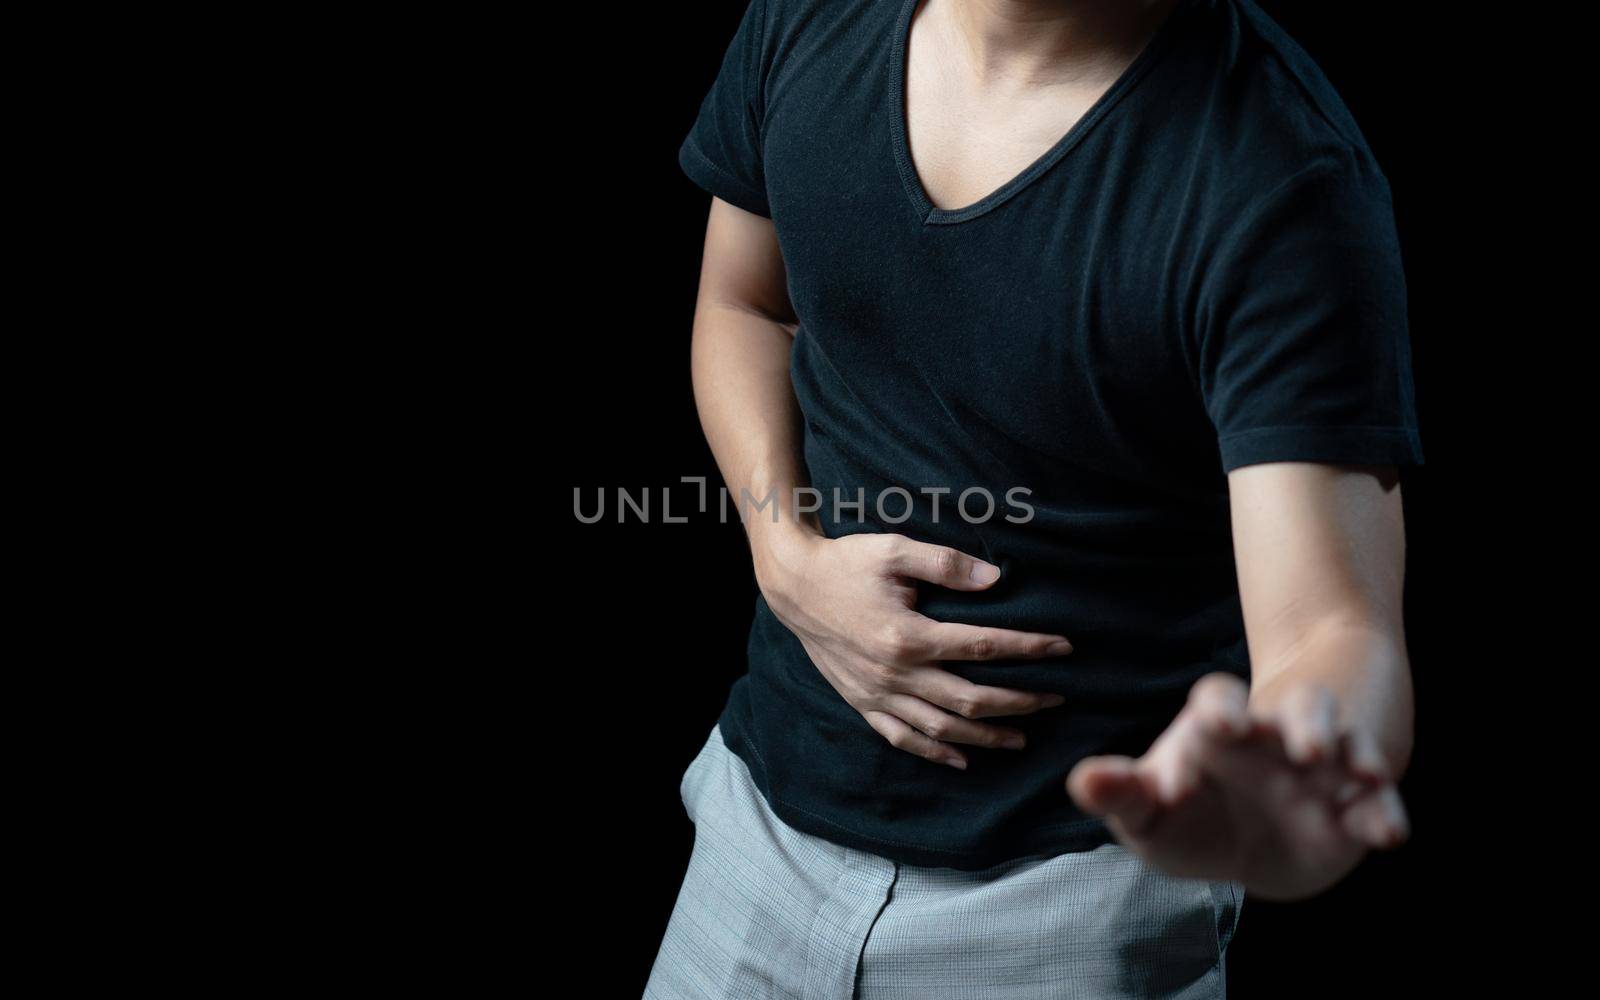 Man abdominal pain, photo of large intestine on body, stomachache diarrhea symptom, menstrual period cramp or food poisoning. Health care concept.